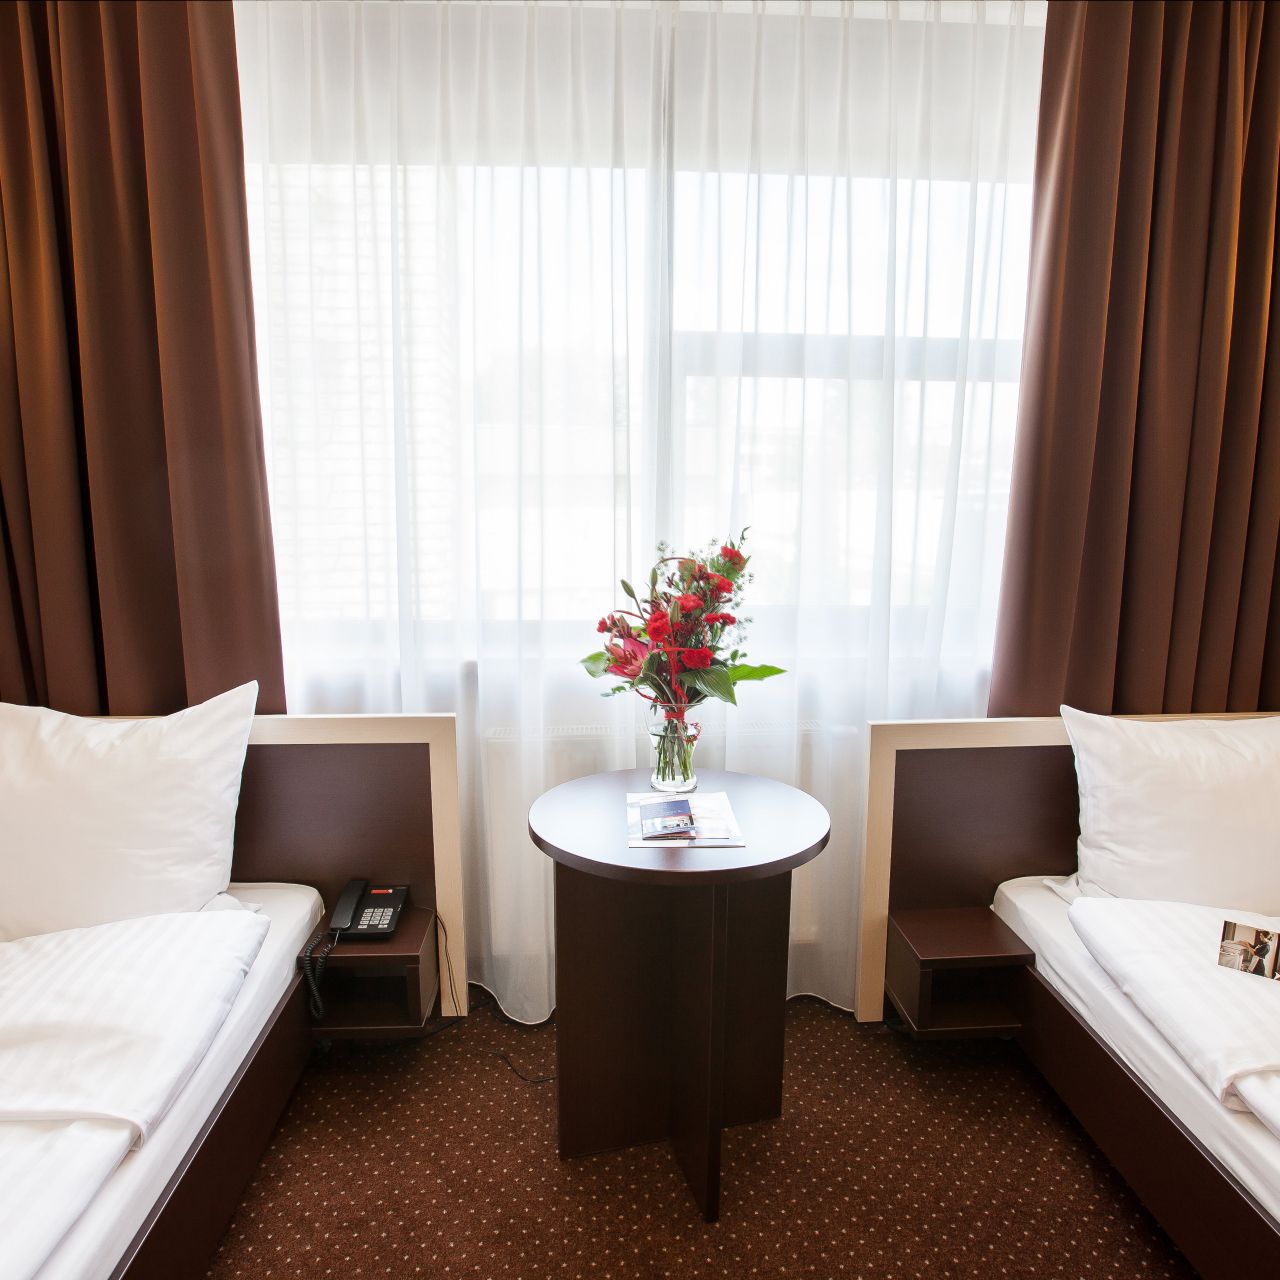 Diament Hotel Spodek - Katowice - Great prices at HOTEL INFO